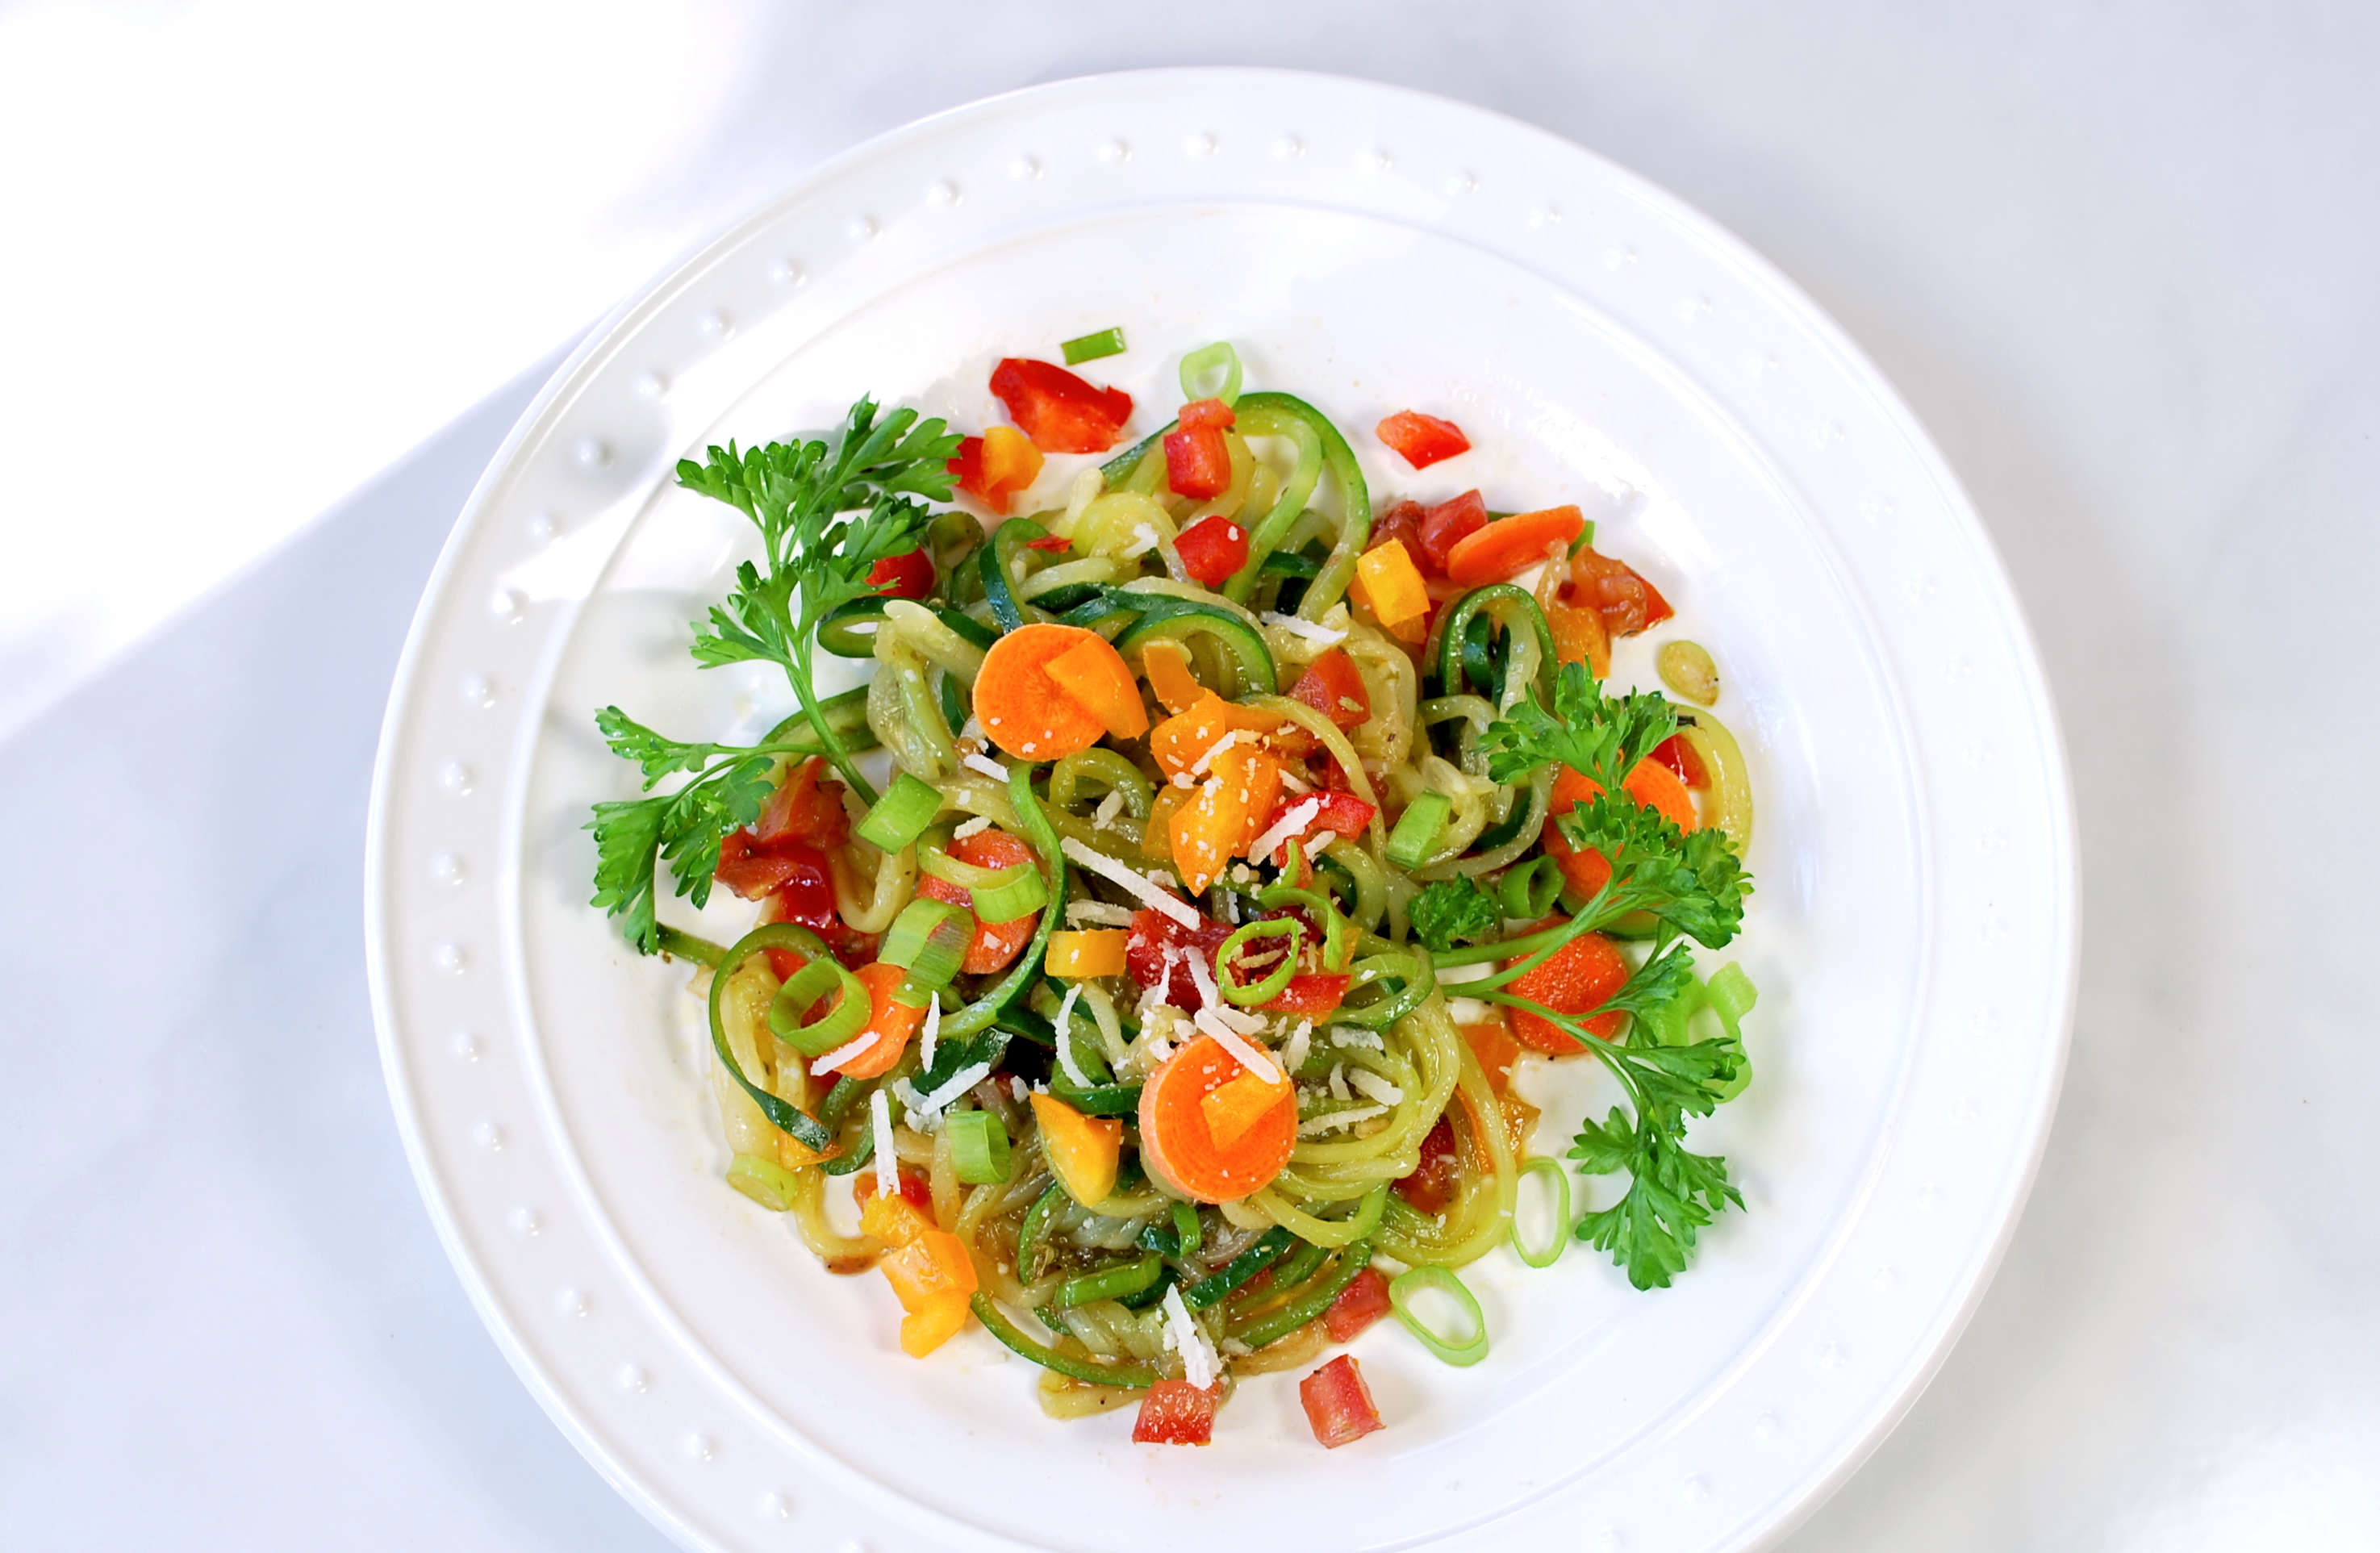 spiralizing recipes - salads - pasta primavera salad